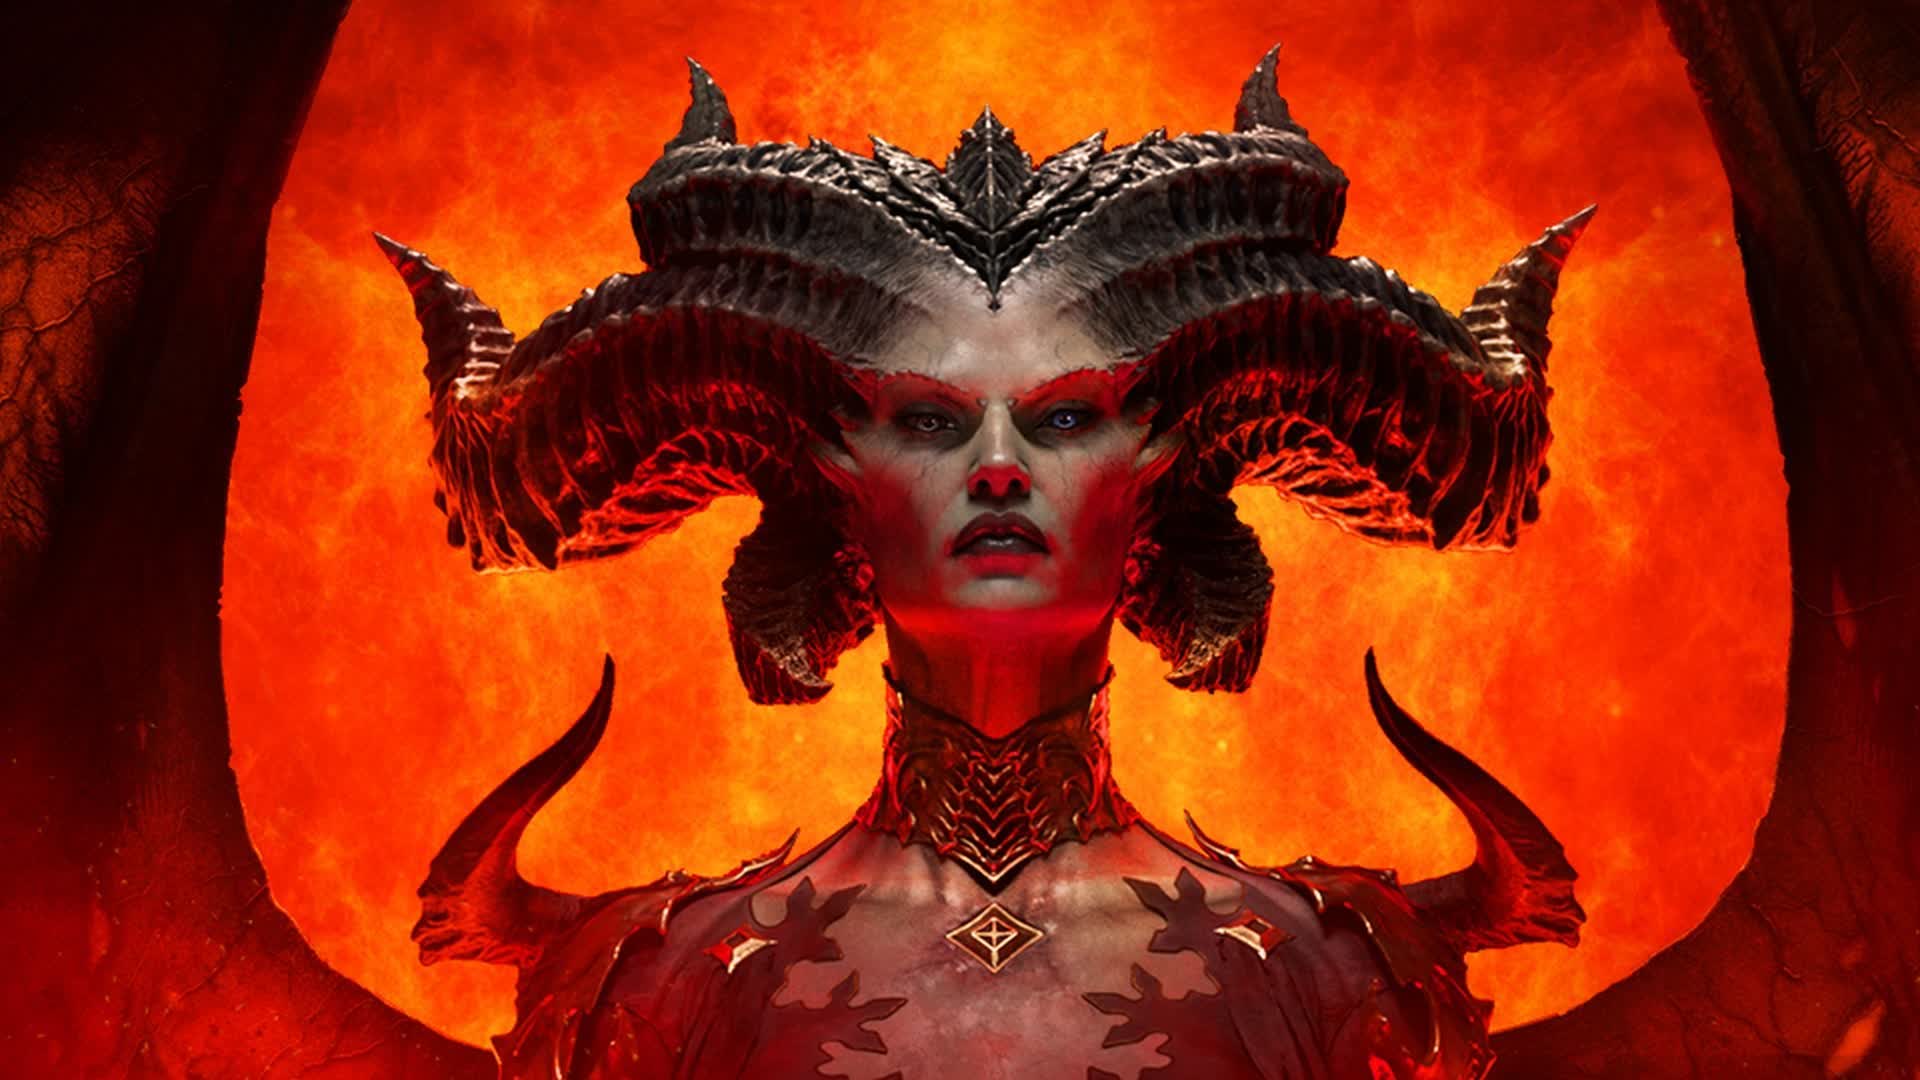 The Diablo 4 beta has been bricking graphics cards